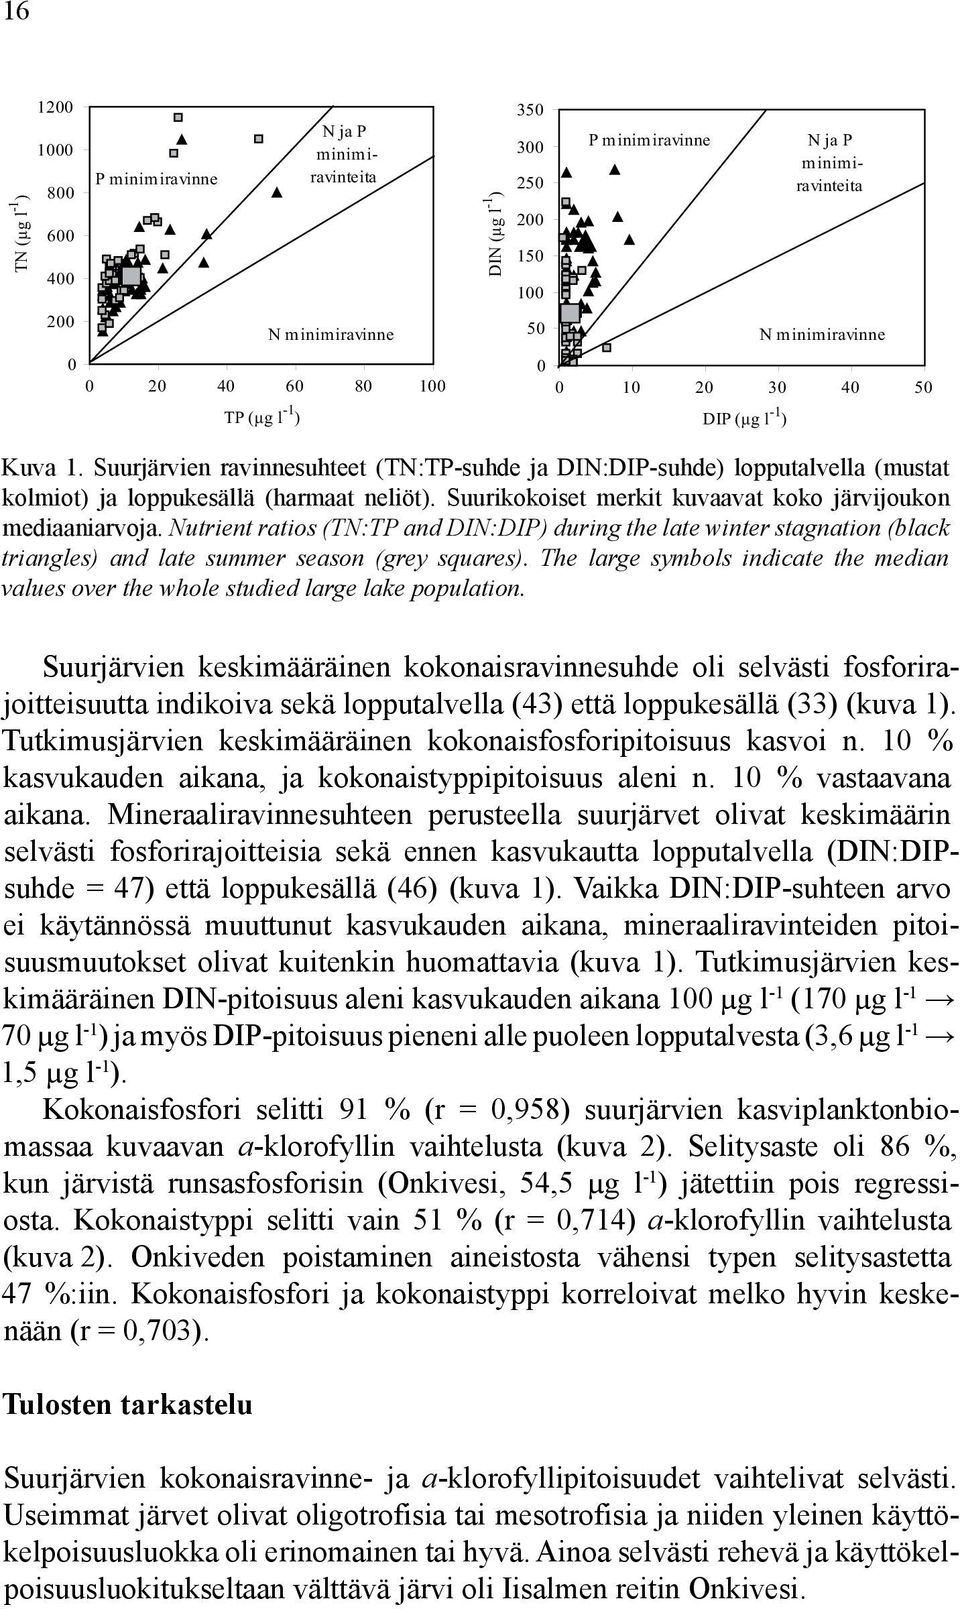 Suurikokoiset merkit kuvaavat koko järvijoukon mediaaniarvoja. Nutrient ratios (TN:TP and DIN:DIP) during the late winter stagnation (black triangles) and late summer season (grey squares).